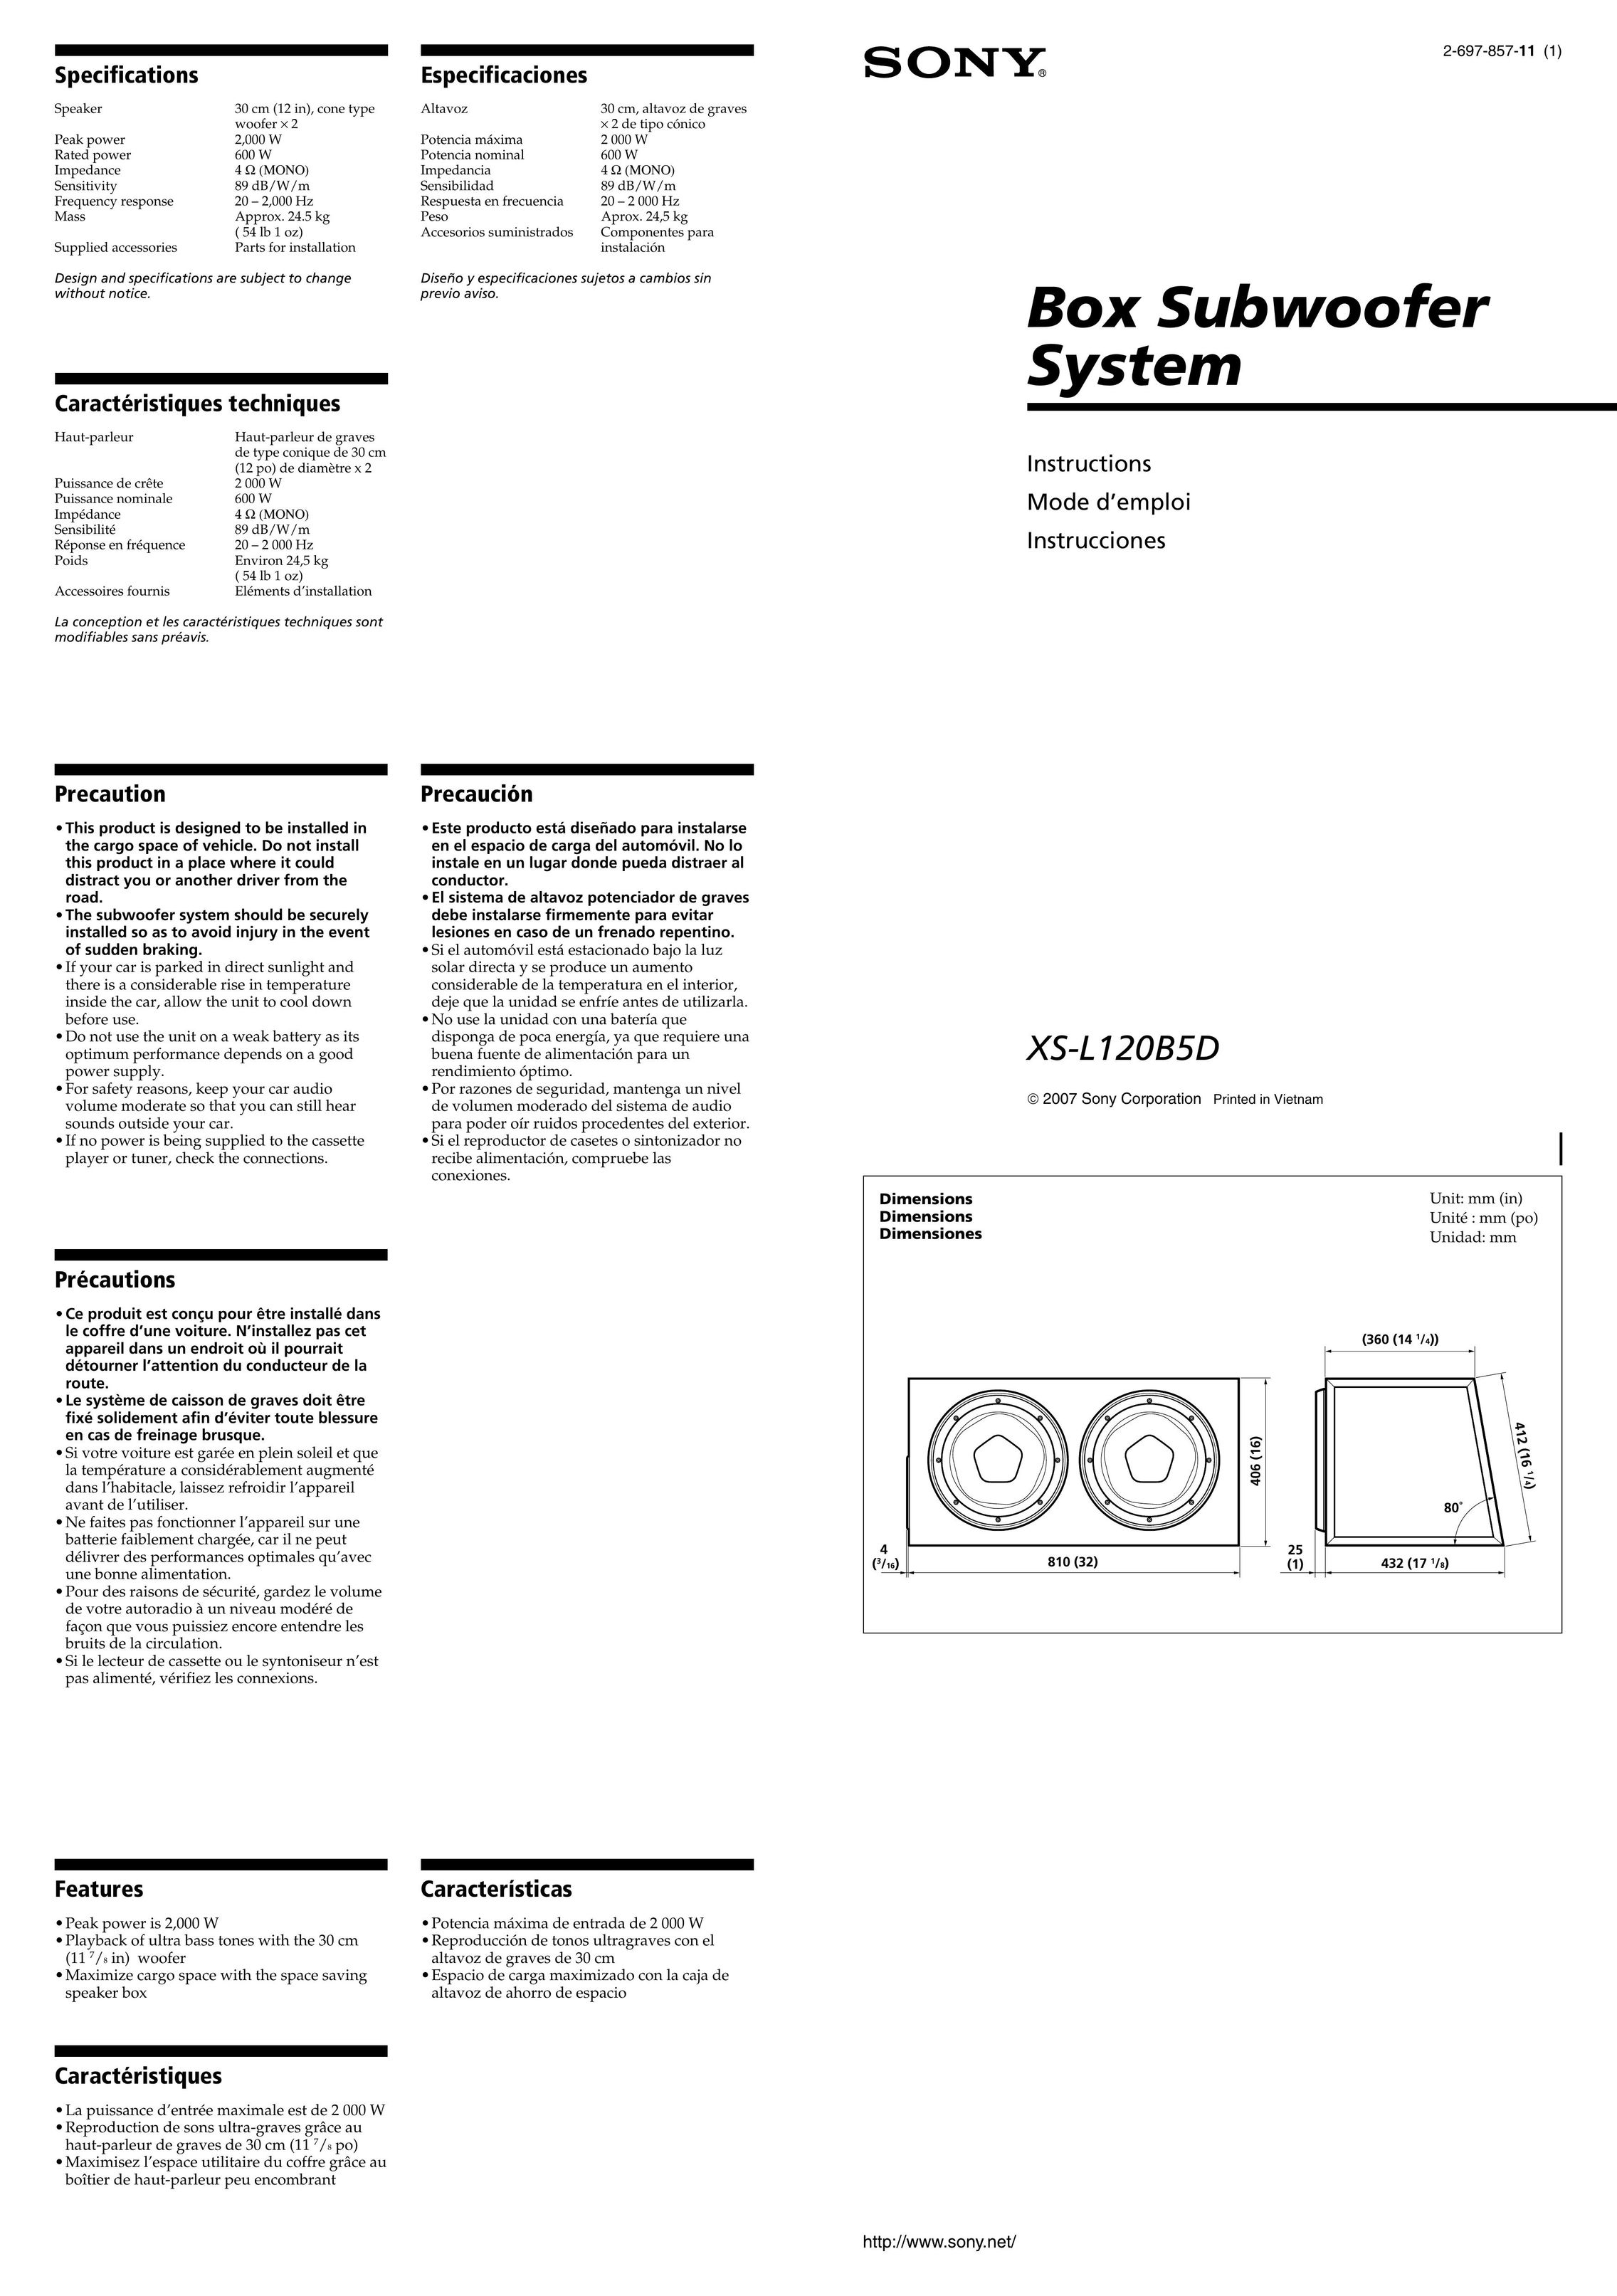 Sony XS-L120B5D Car Speaker User Manual